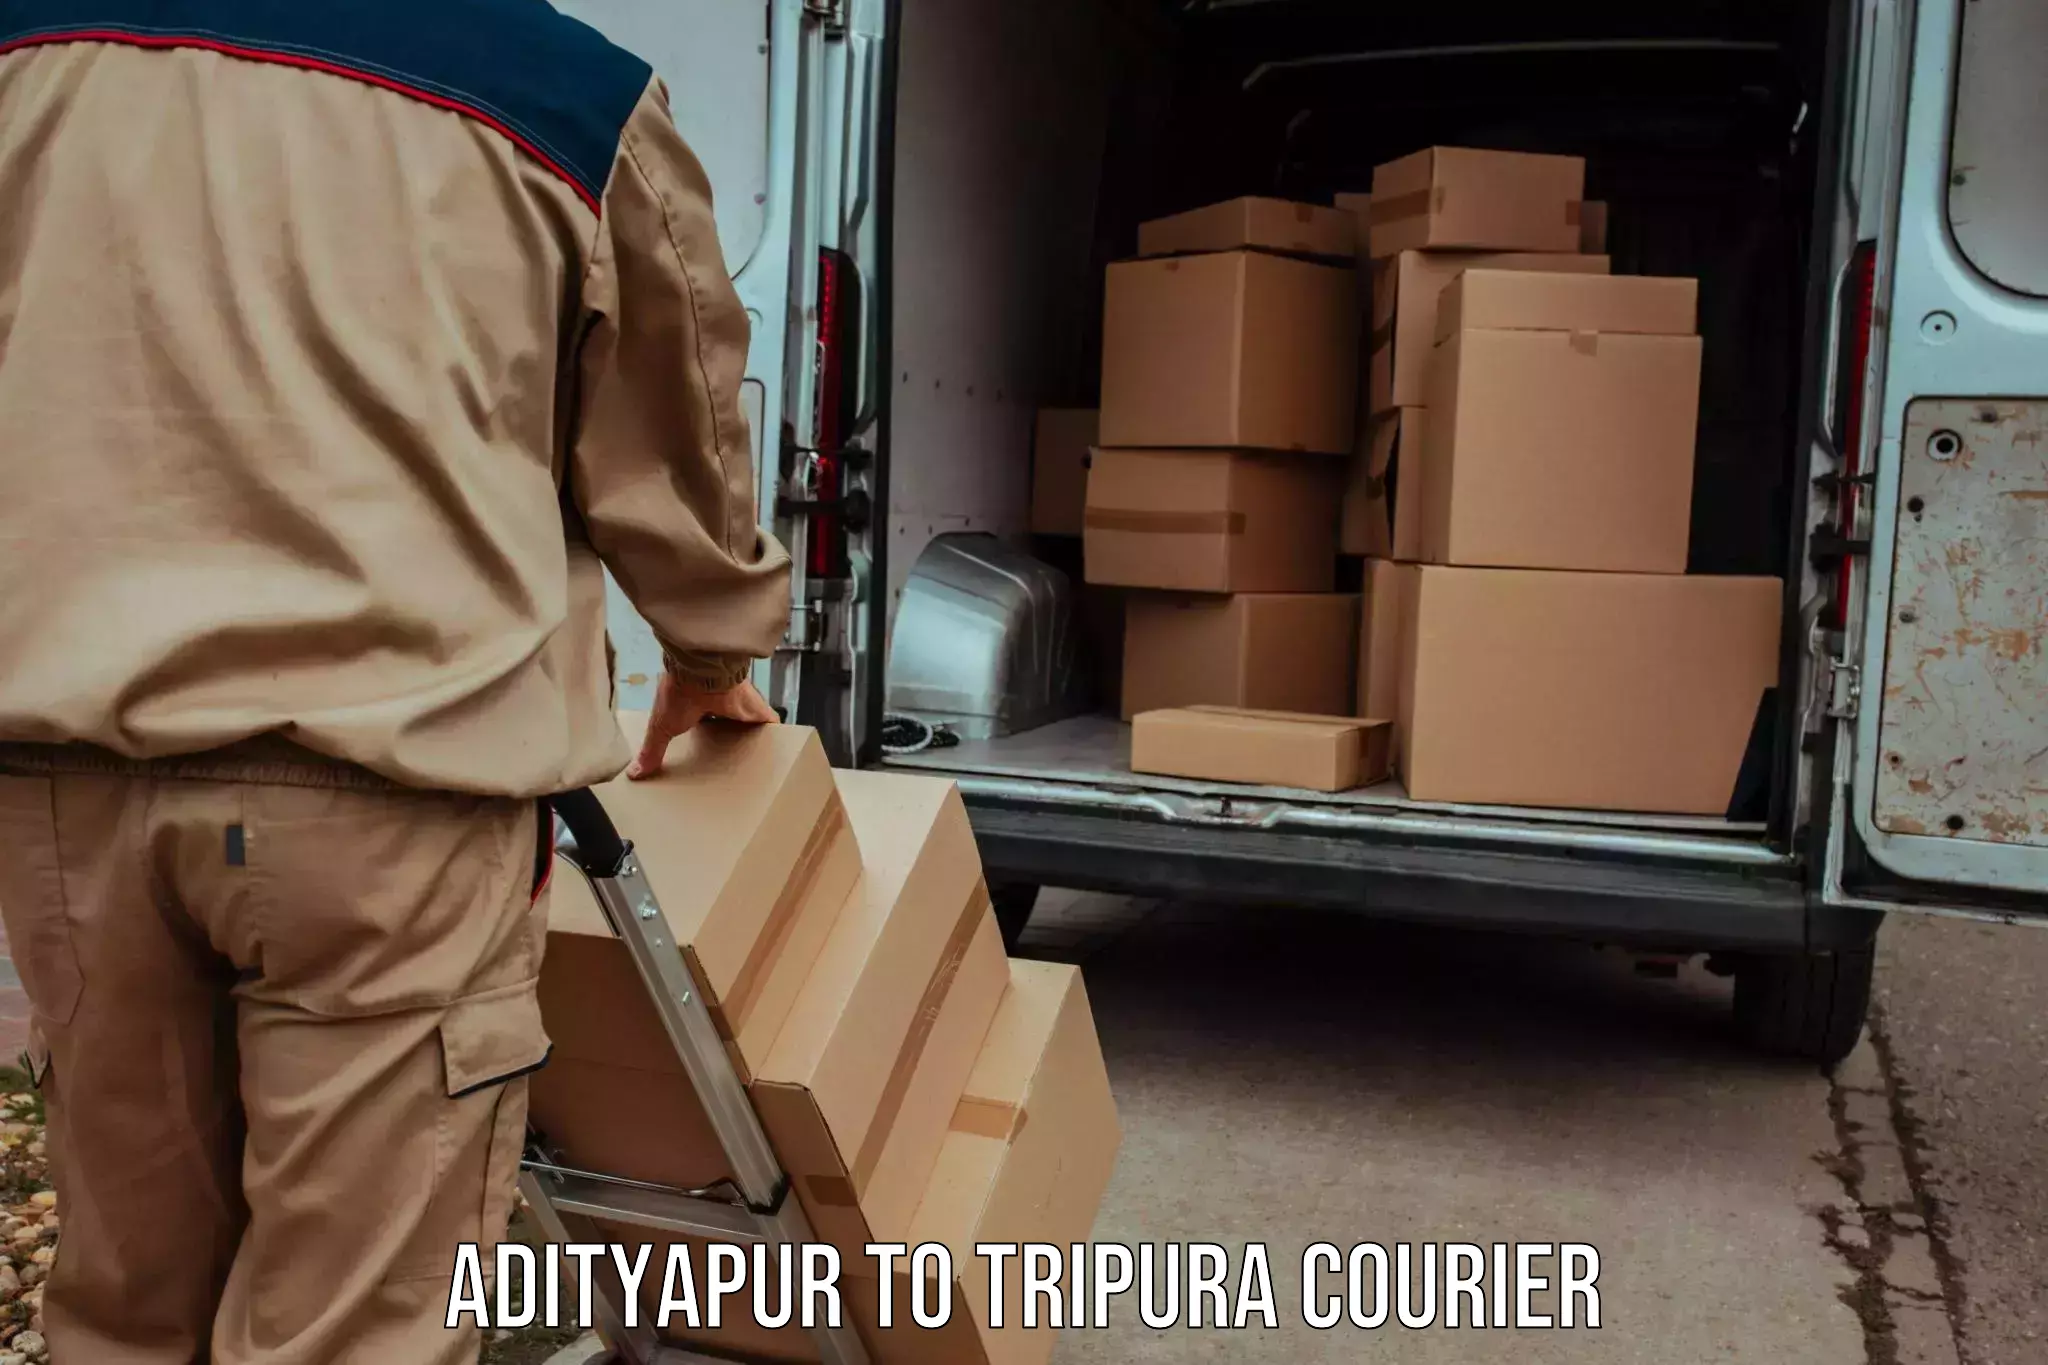 Next-day delivery options Adityapur to Aambasa